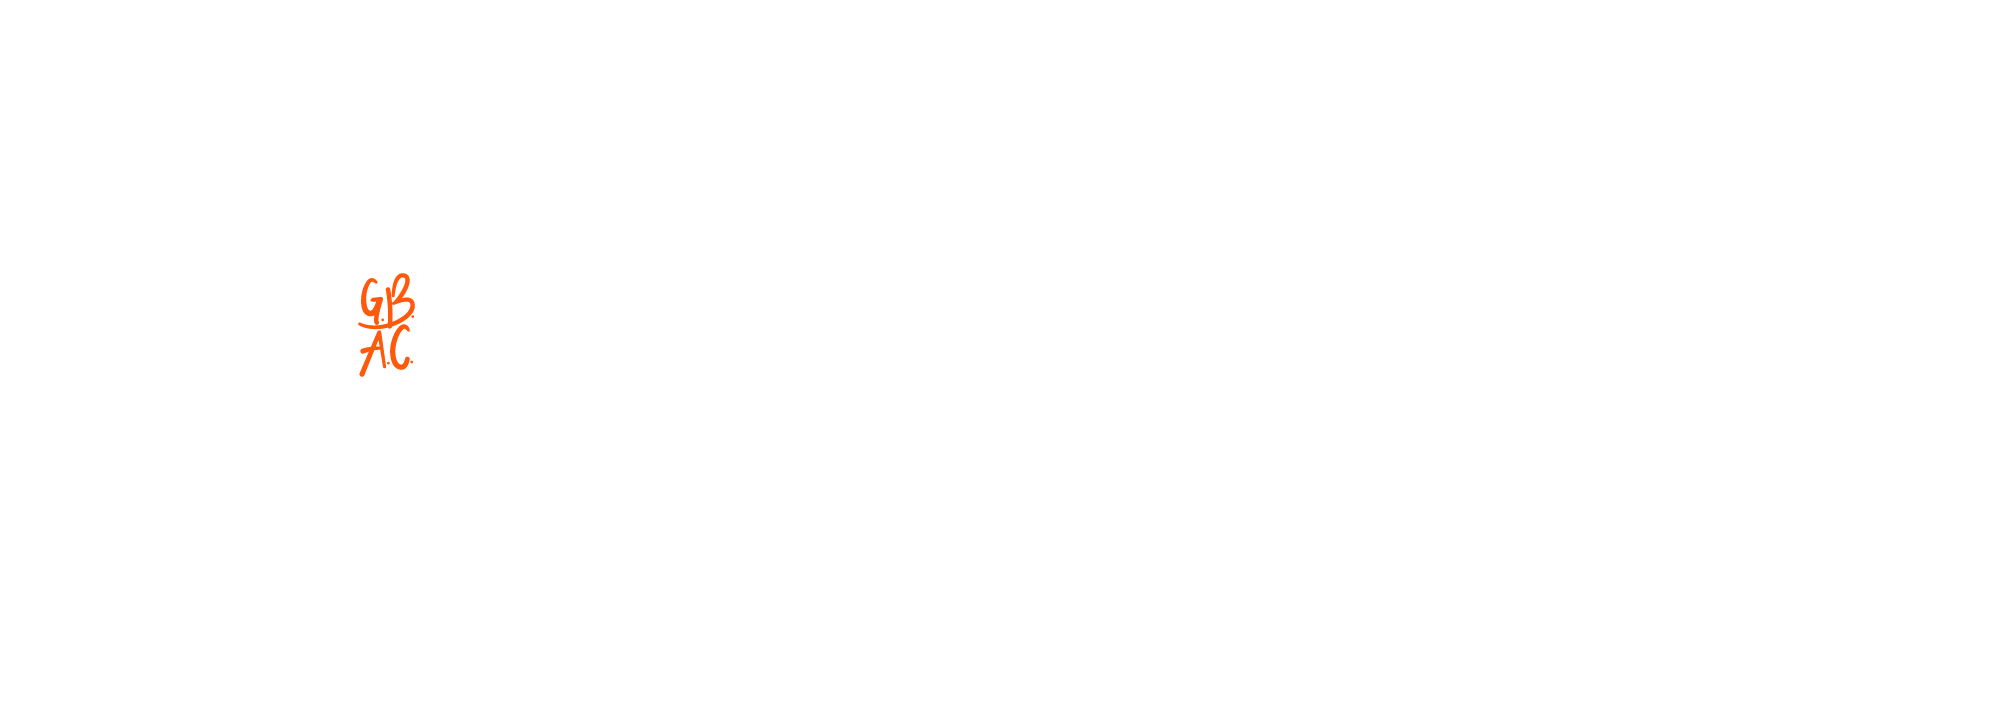 GIMNASIO BILINGUE ALTAMAR DE CARTAGENA